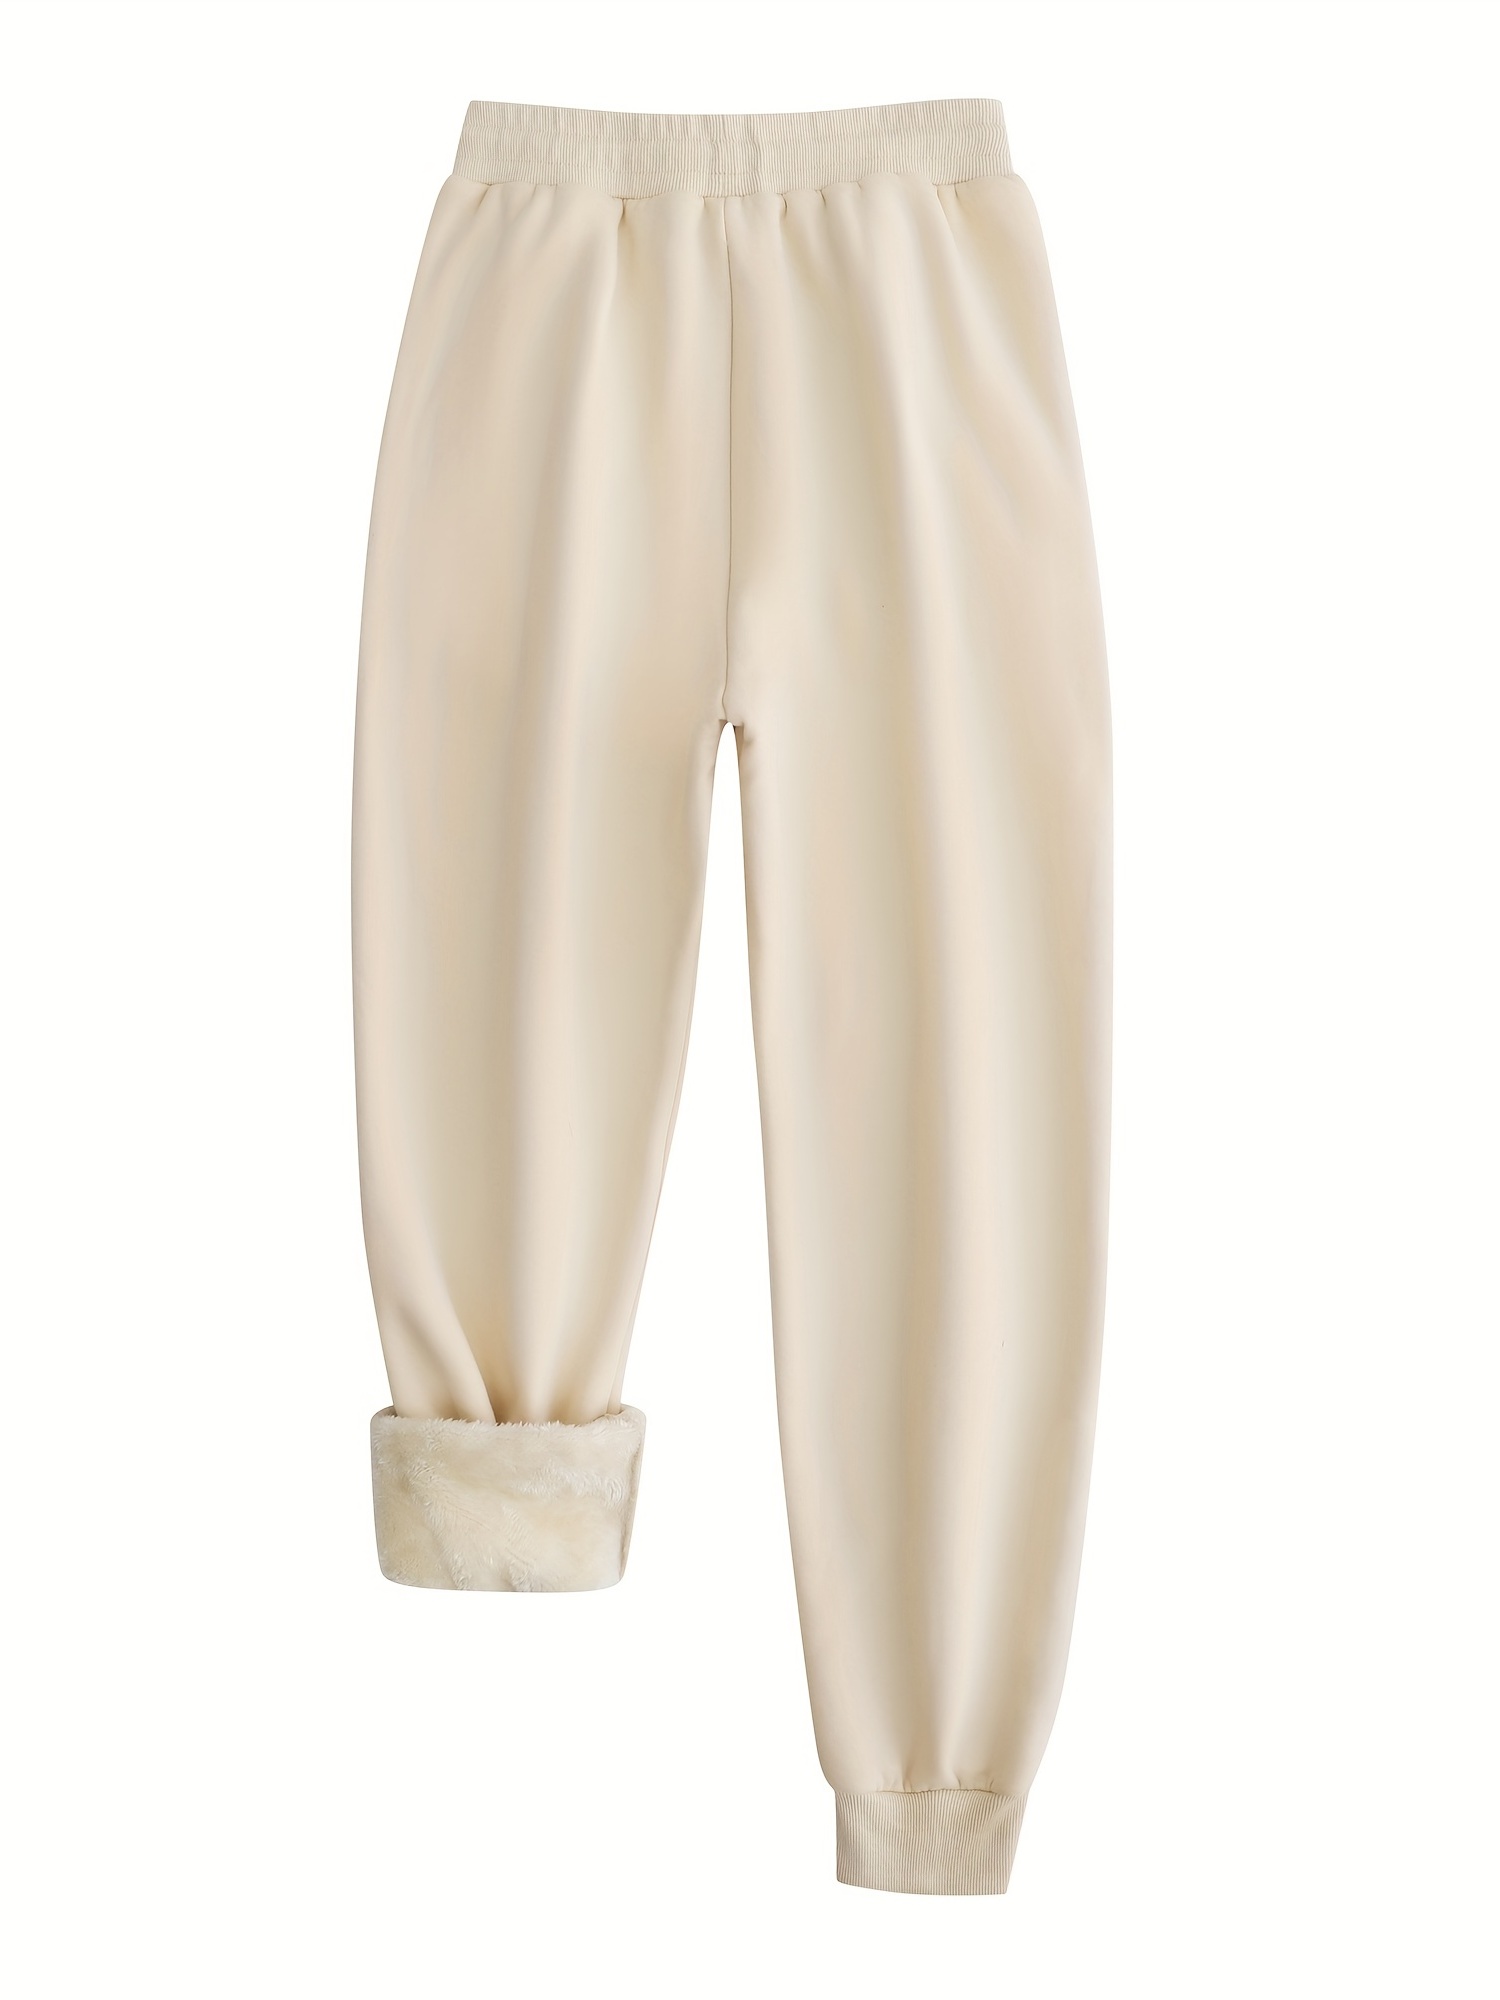 plush thermal pants, winter plush thermal pants casual drawstring pocket pants womens clothing details 3